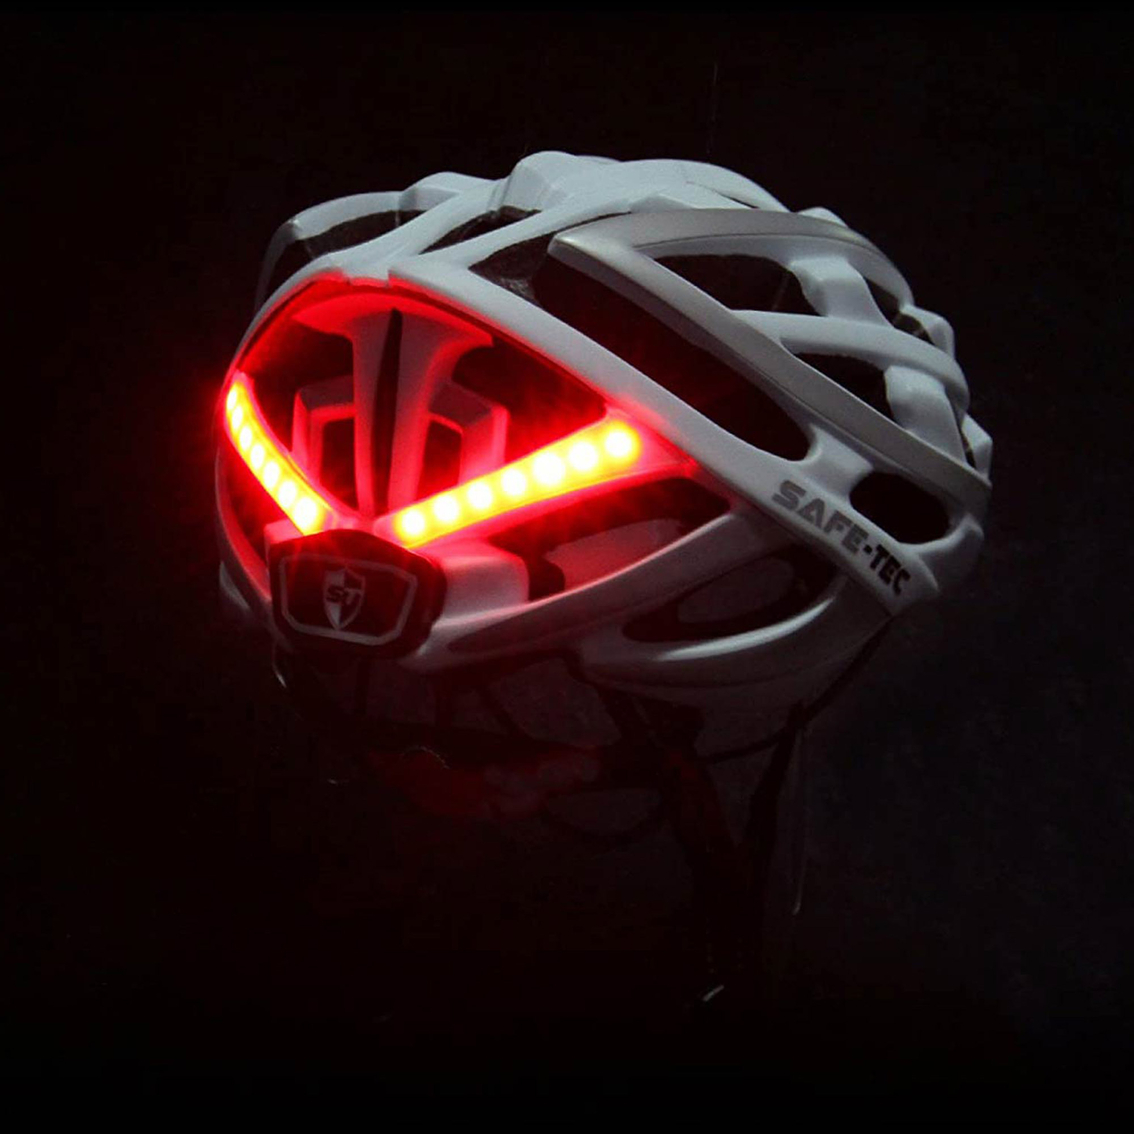 Royal Birkdale Safe Tec MIPS Smart Bicycle Helmet - Image 2 of 3